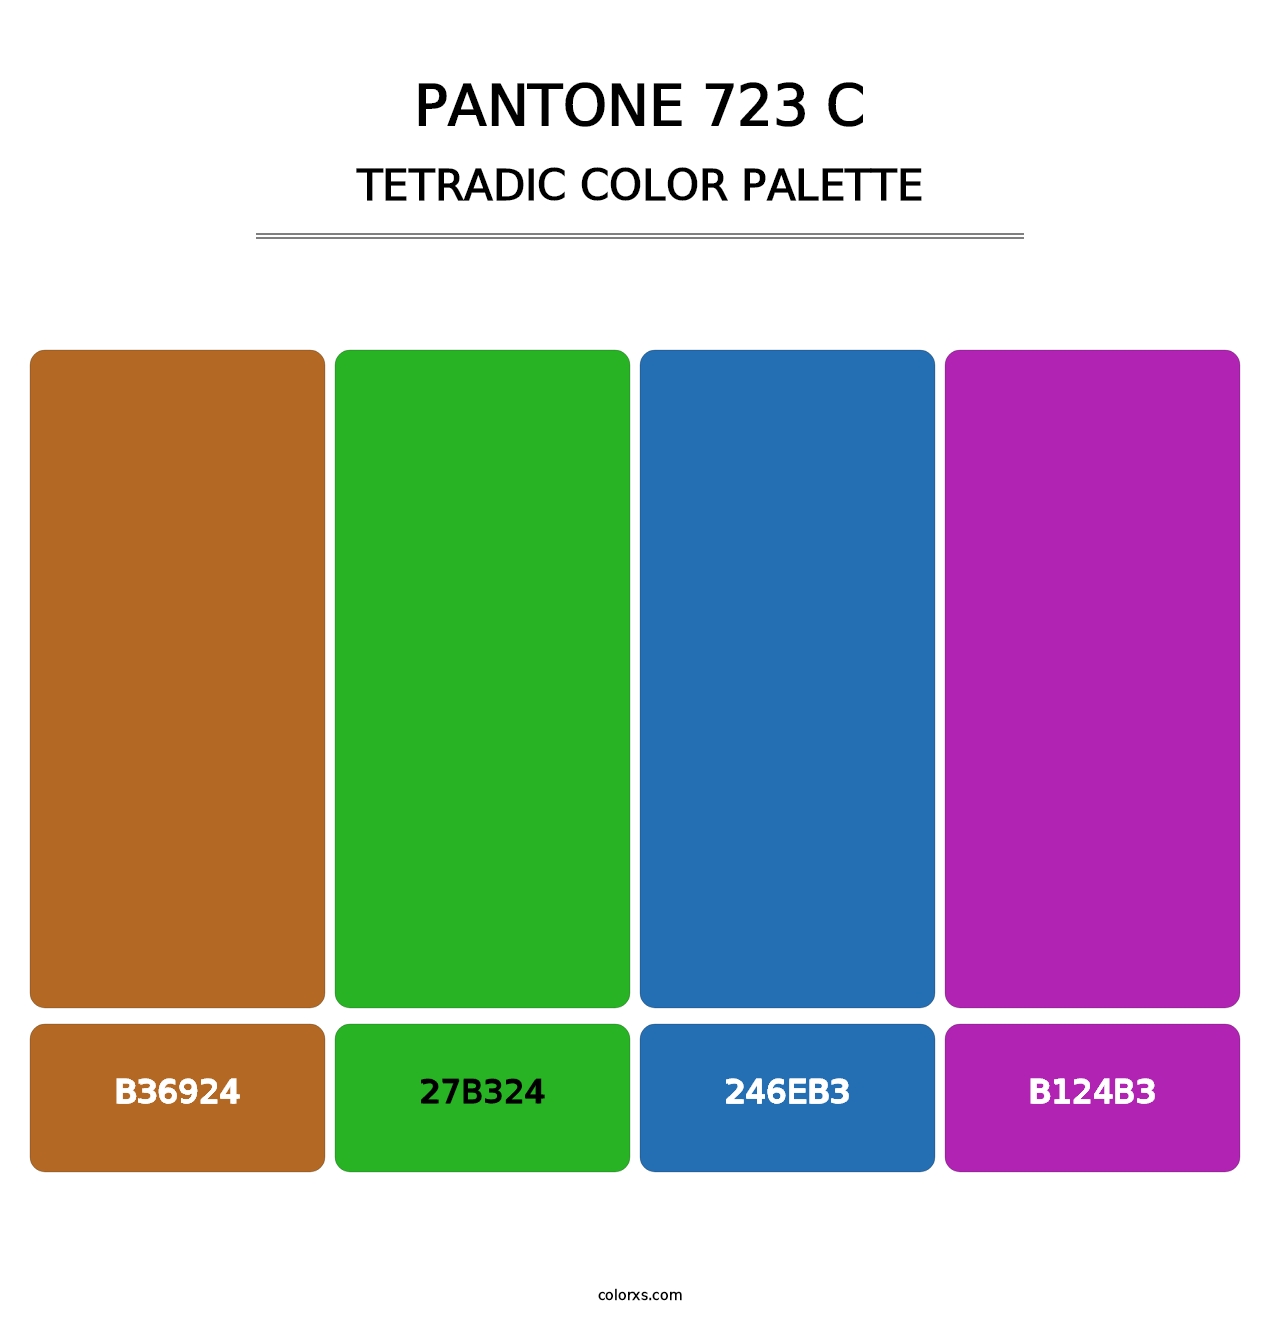 PANTONE 723 C - Tetradic Color Palette